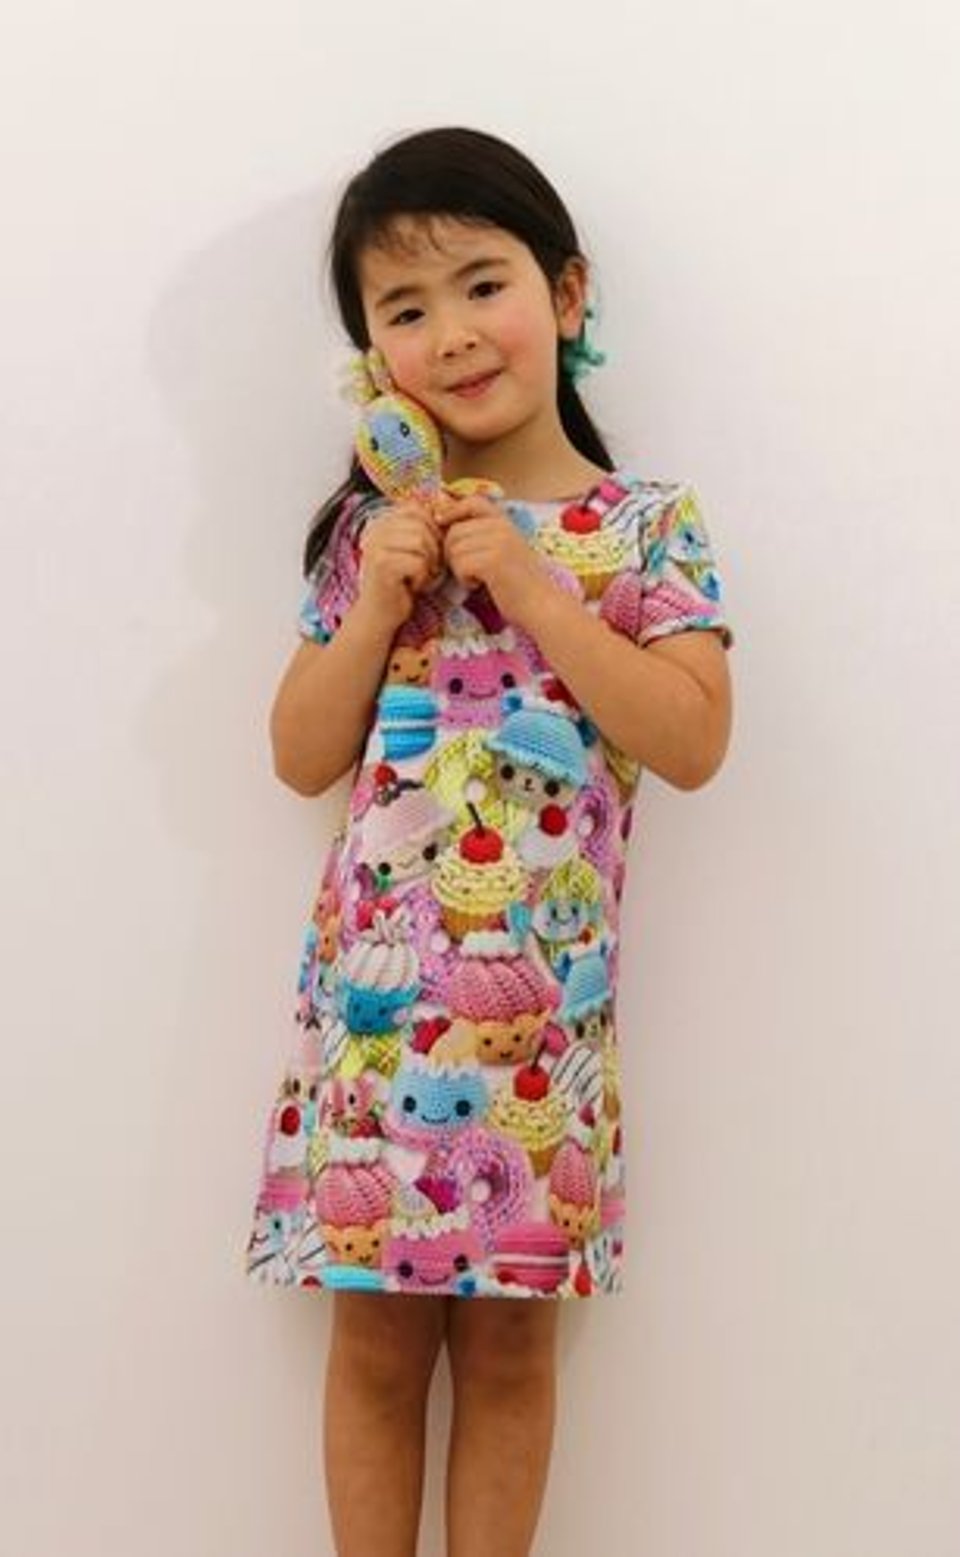 ONE OF A KIND Cupcake Dress